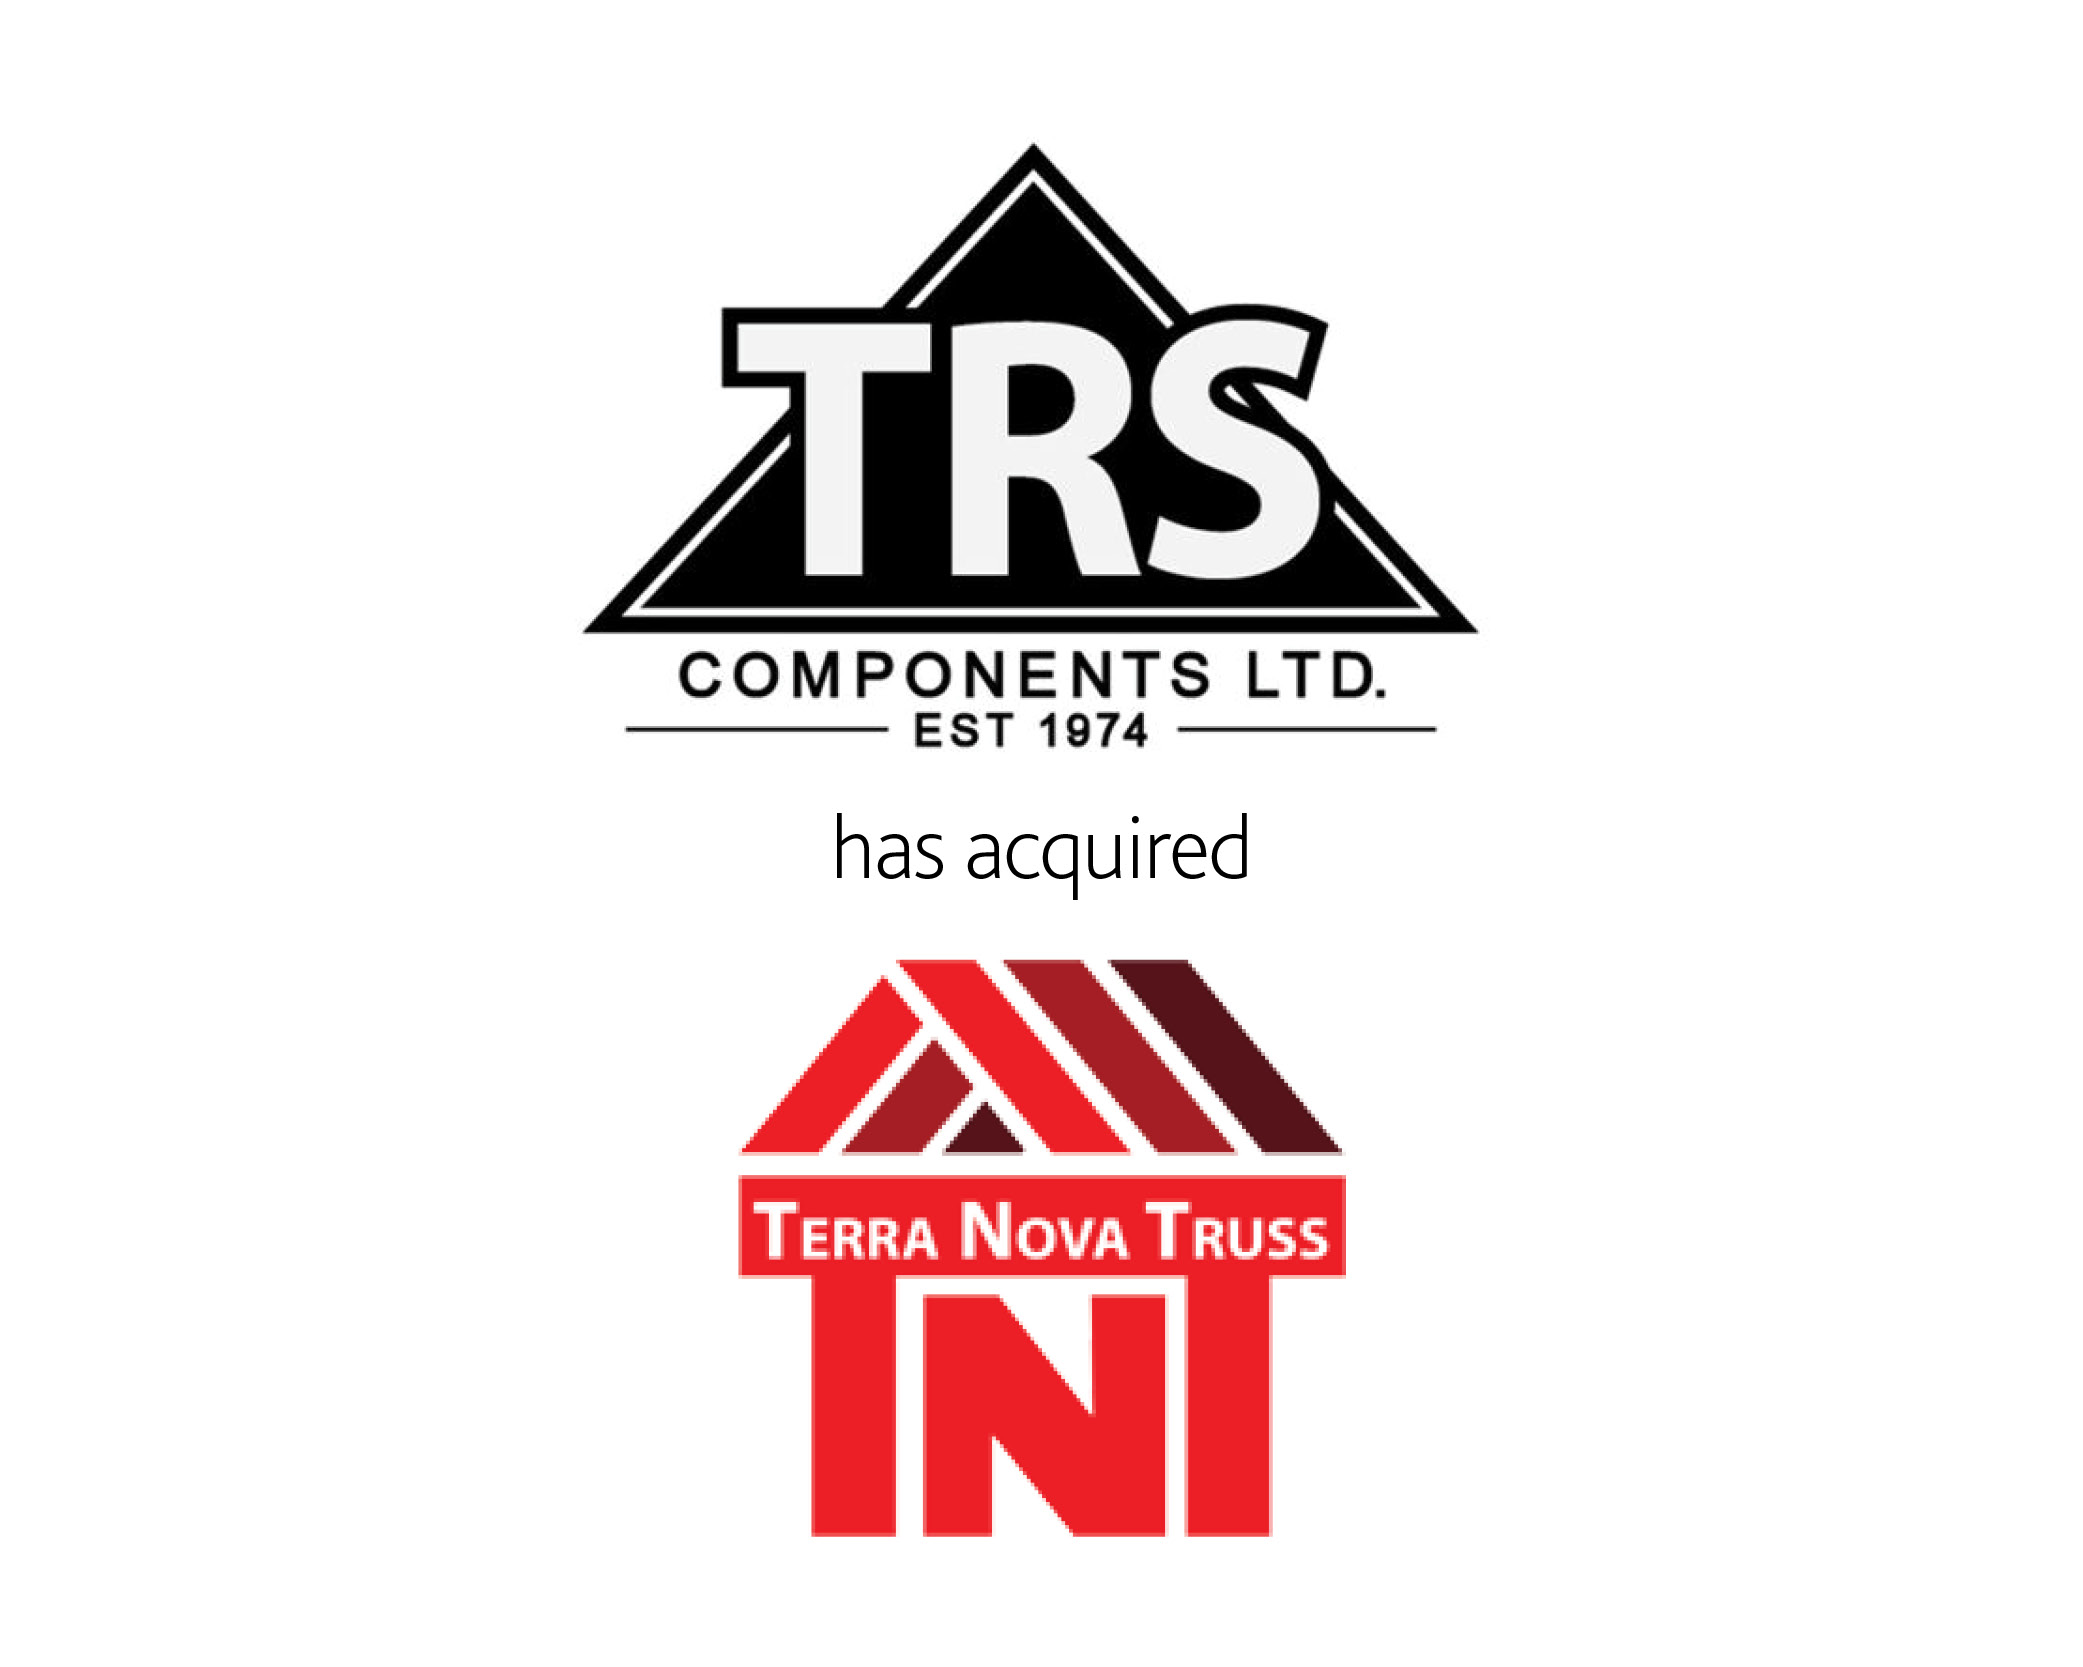 TRS Letter Logo Design Vector Stock Vector - Illustration of information,  internet: 176122457